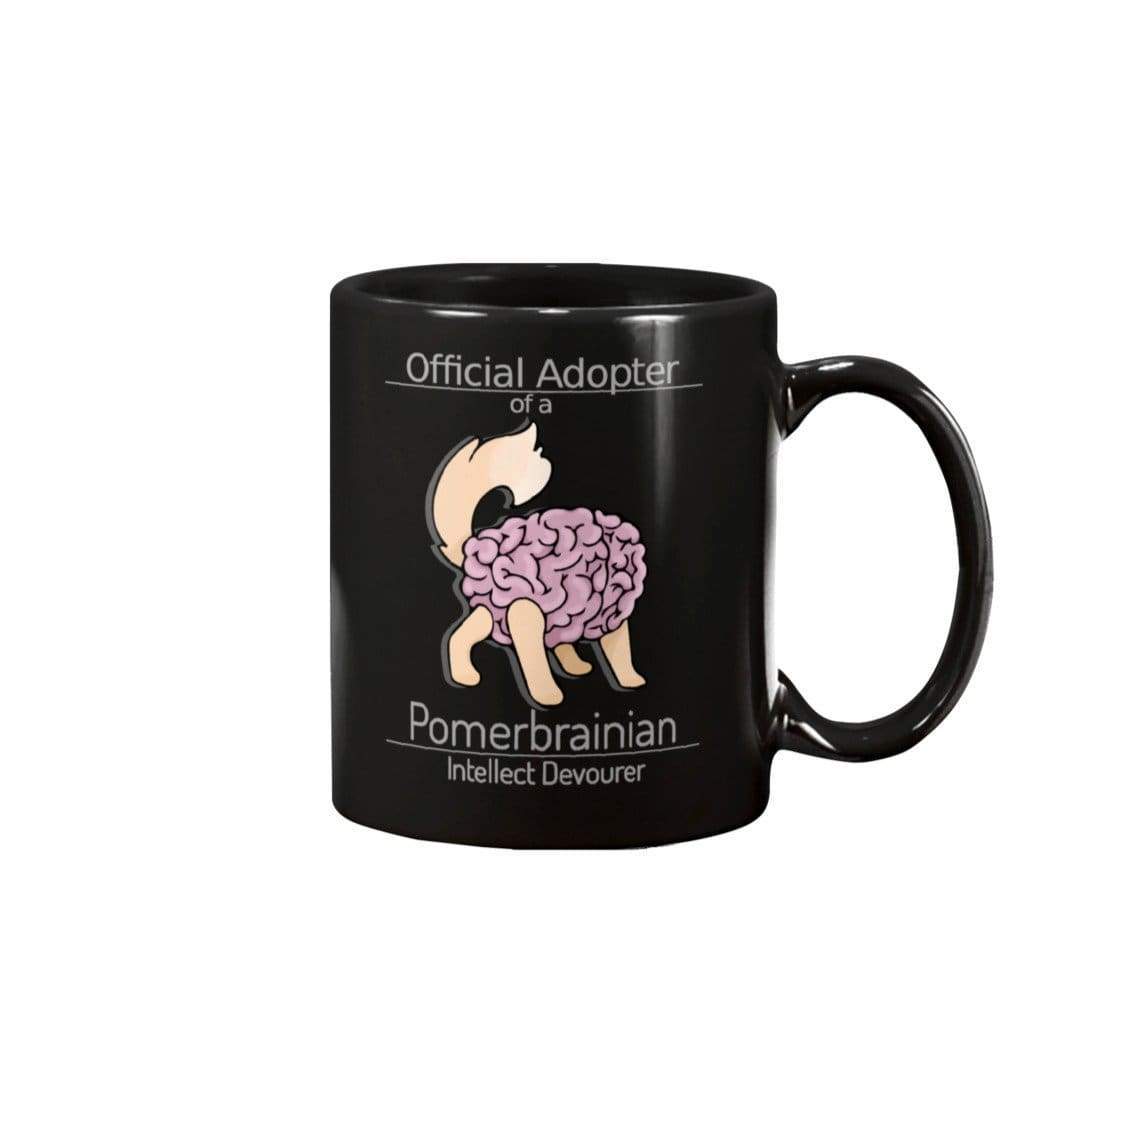 Pomerbrainian Intellect Devourer 11oz Coffee Mug - Mugs